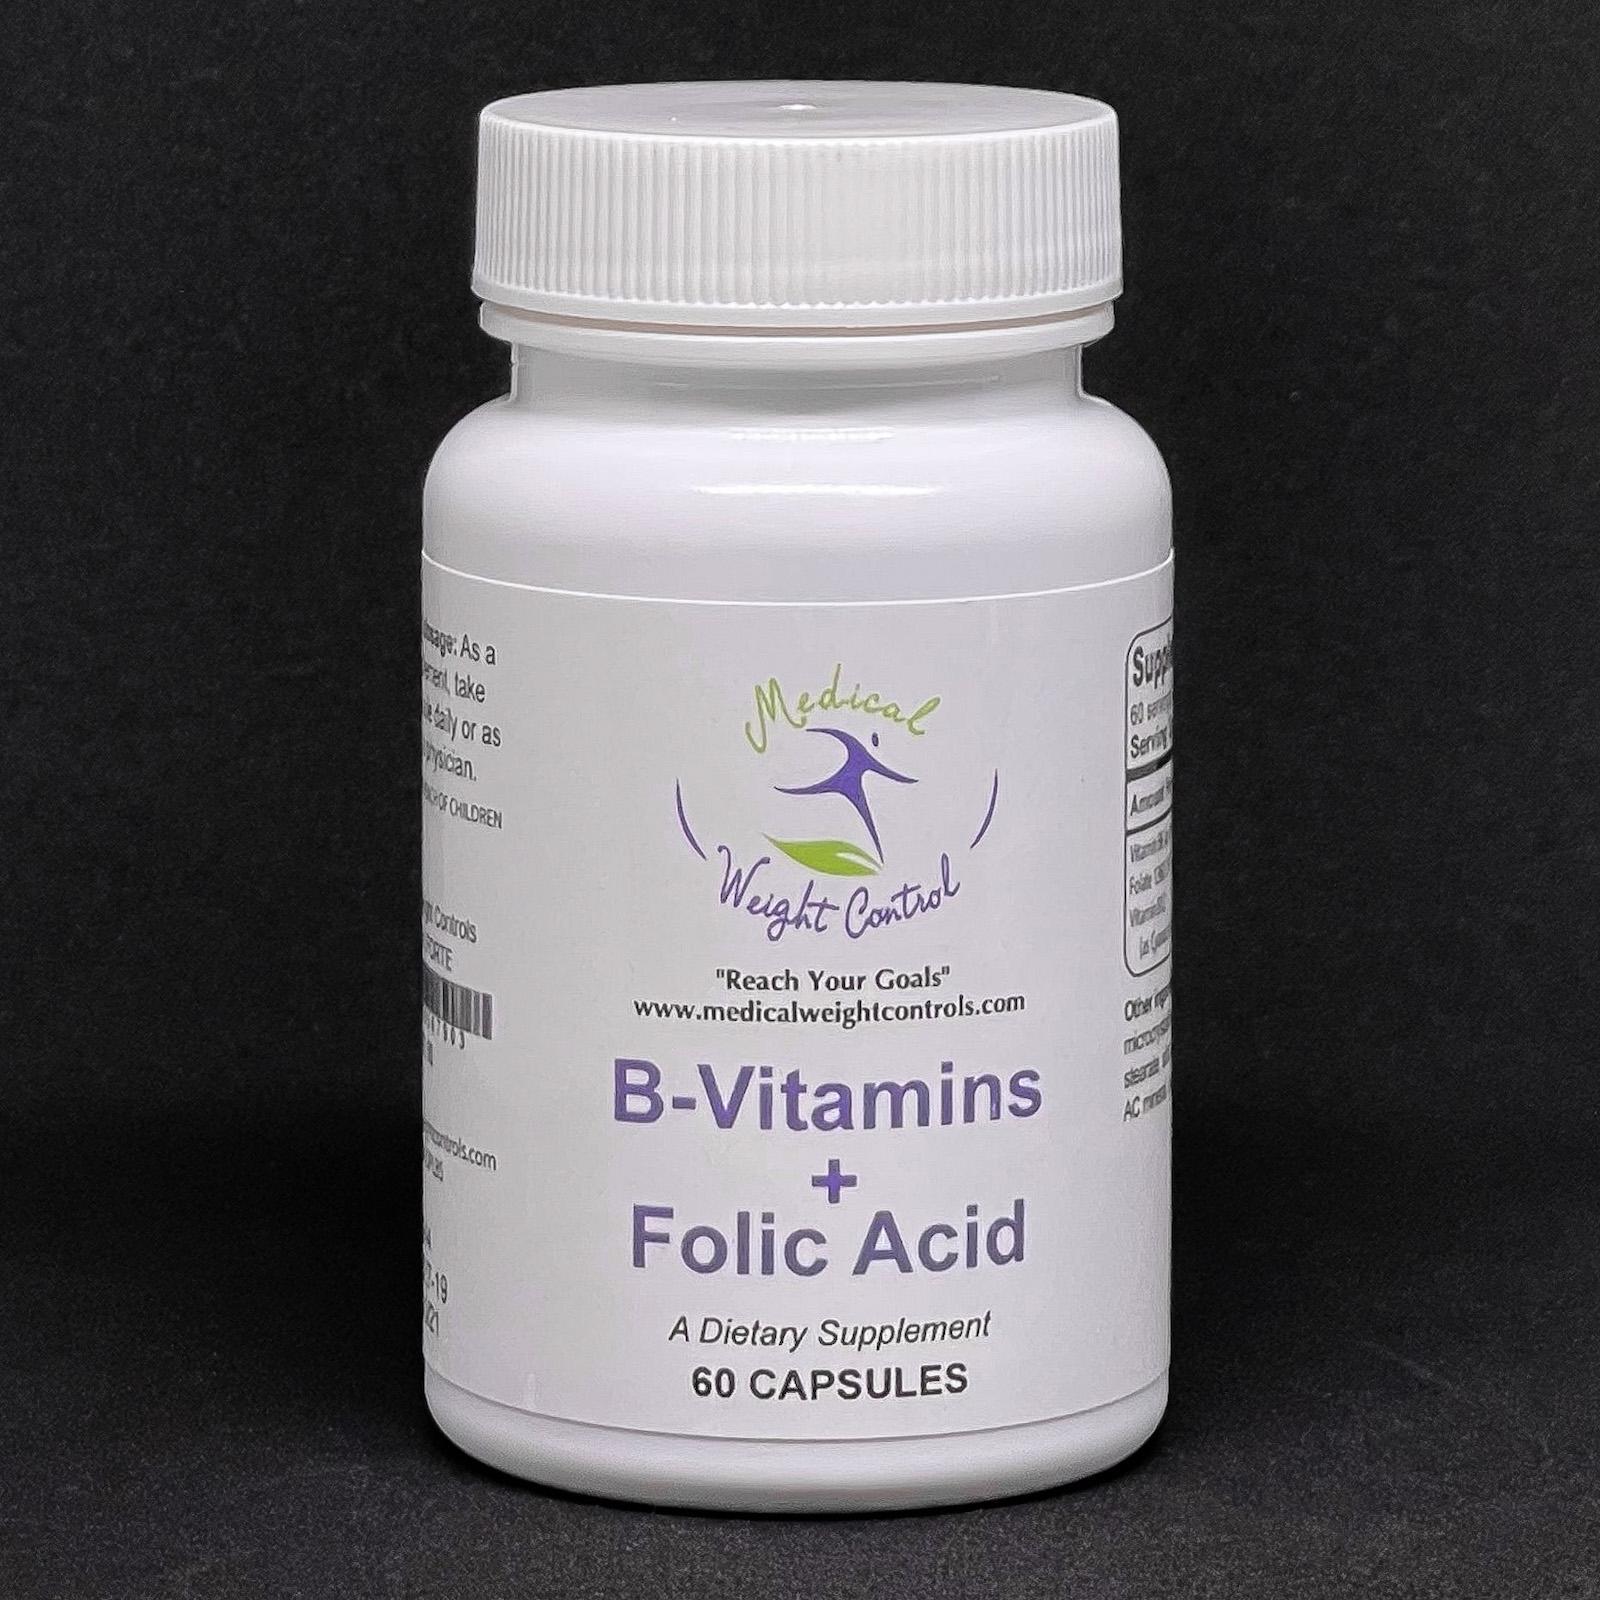 B-Vitamins + Folic Acid